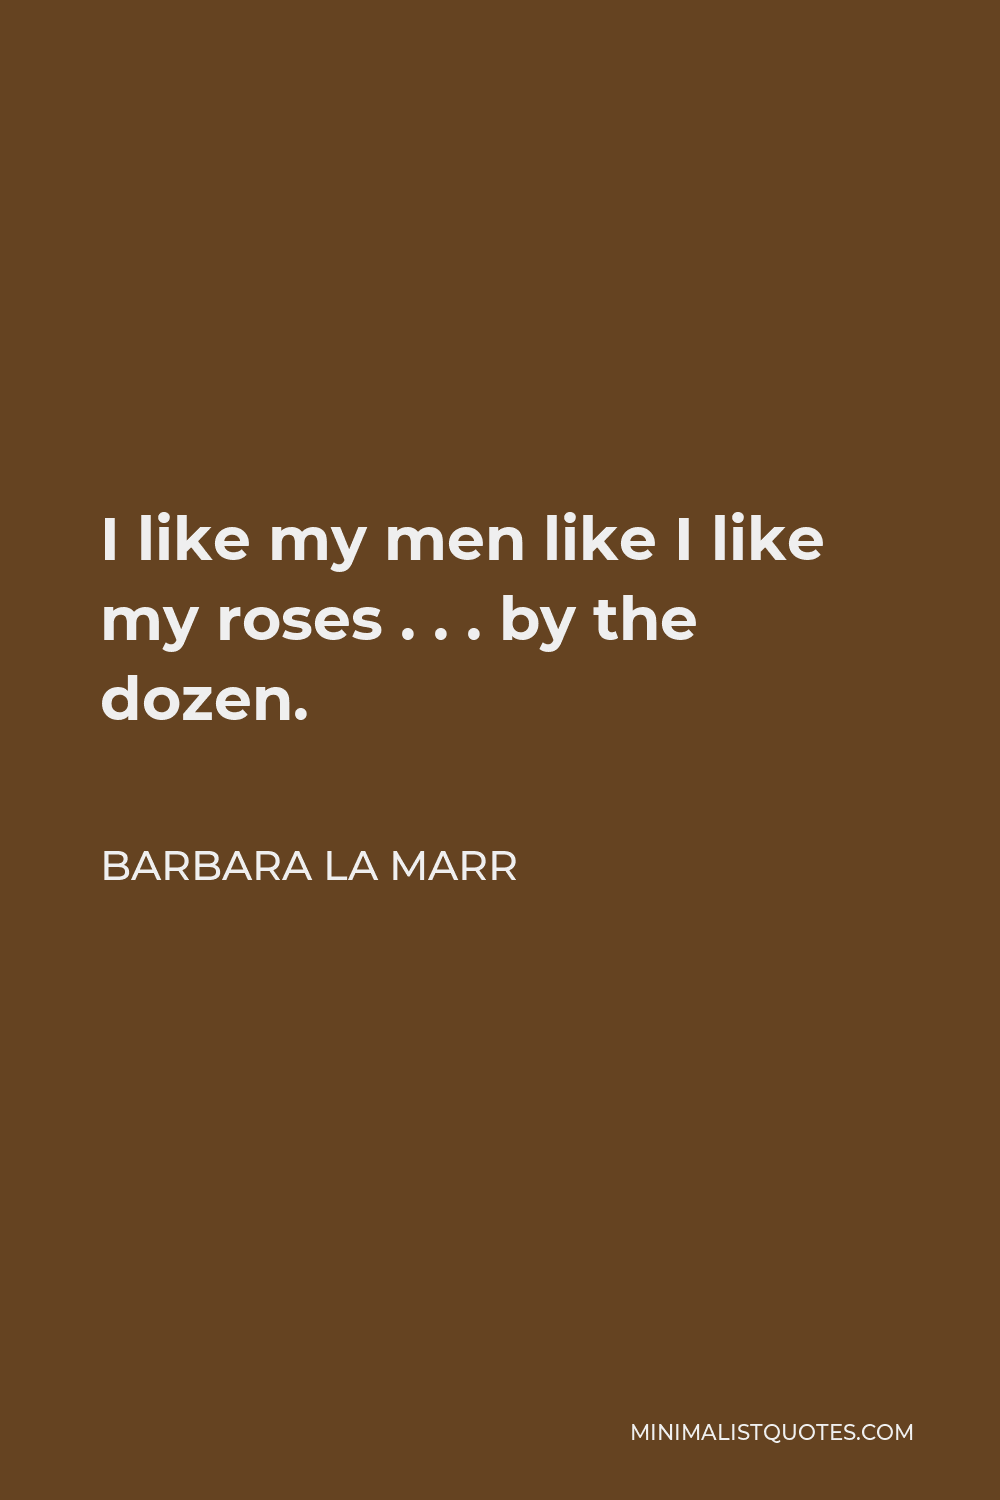 Barbara La Marr Quote - I like my men like I like my roses . . . by the dozen.